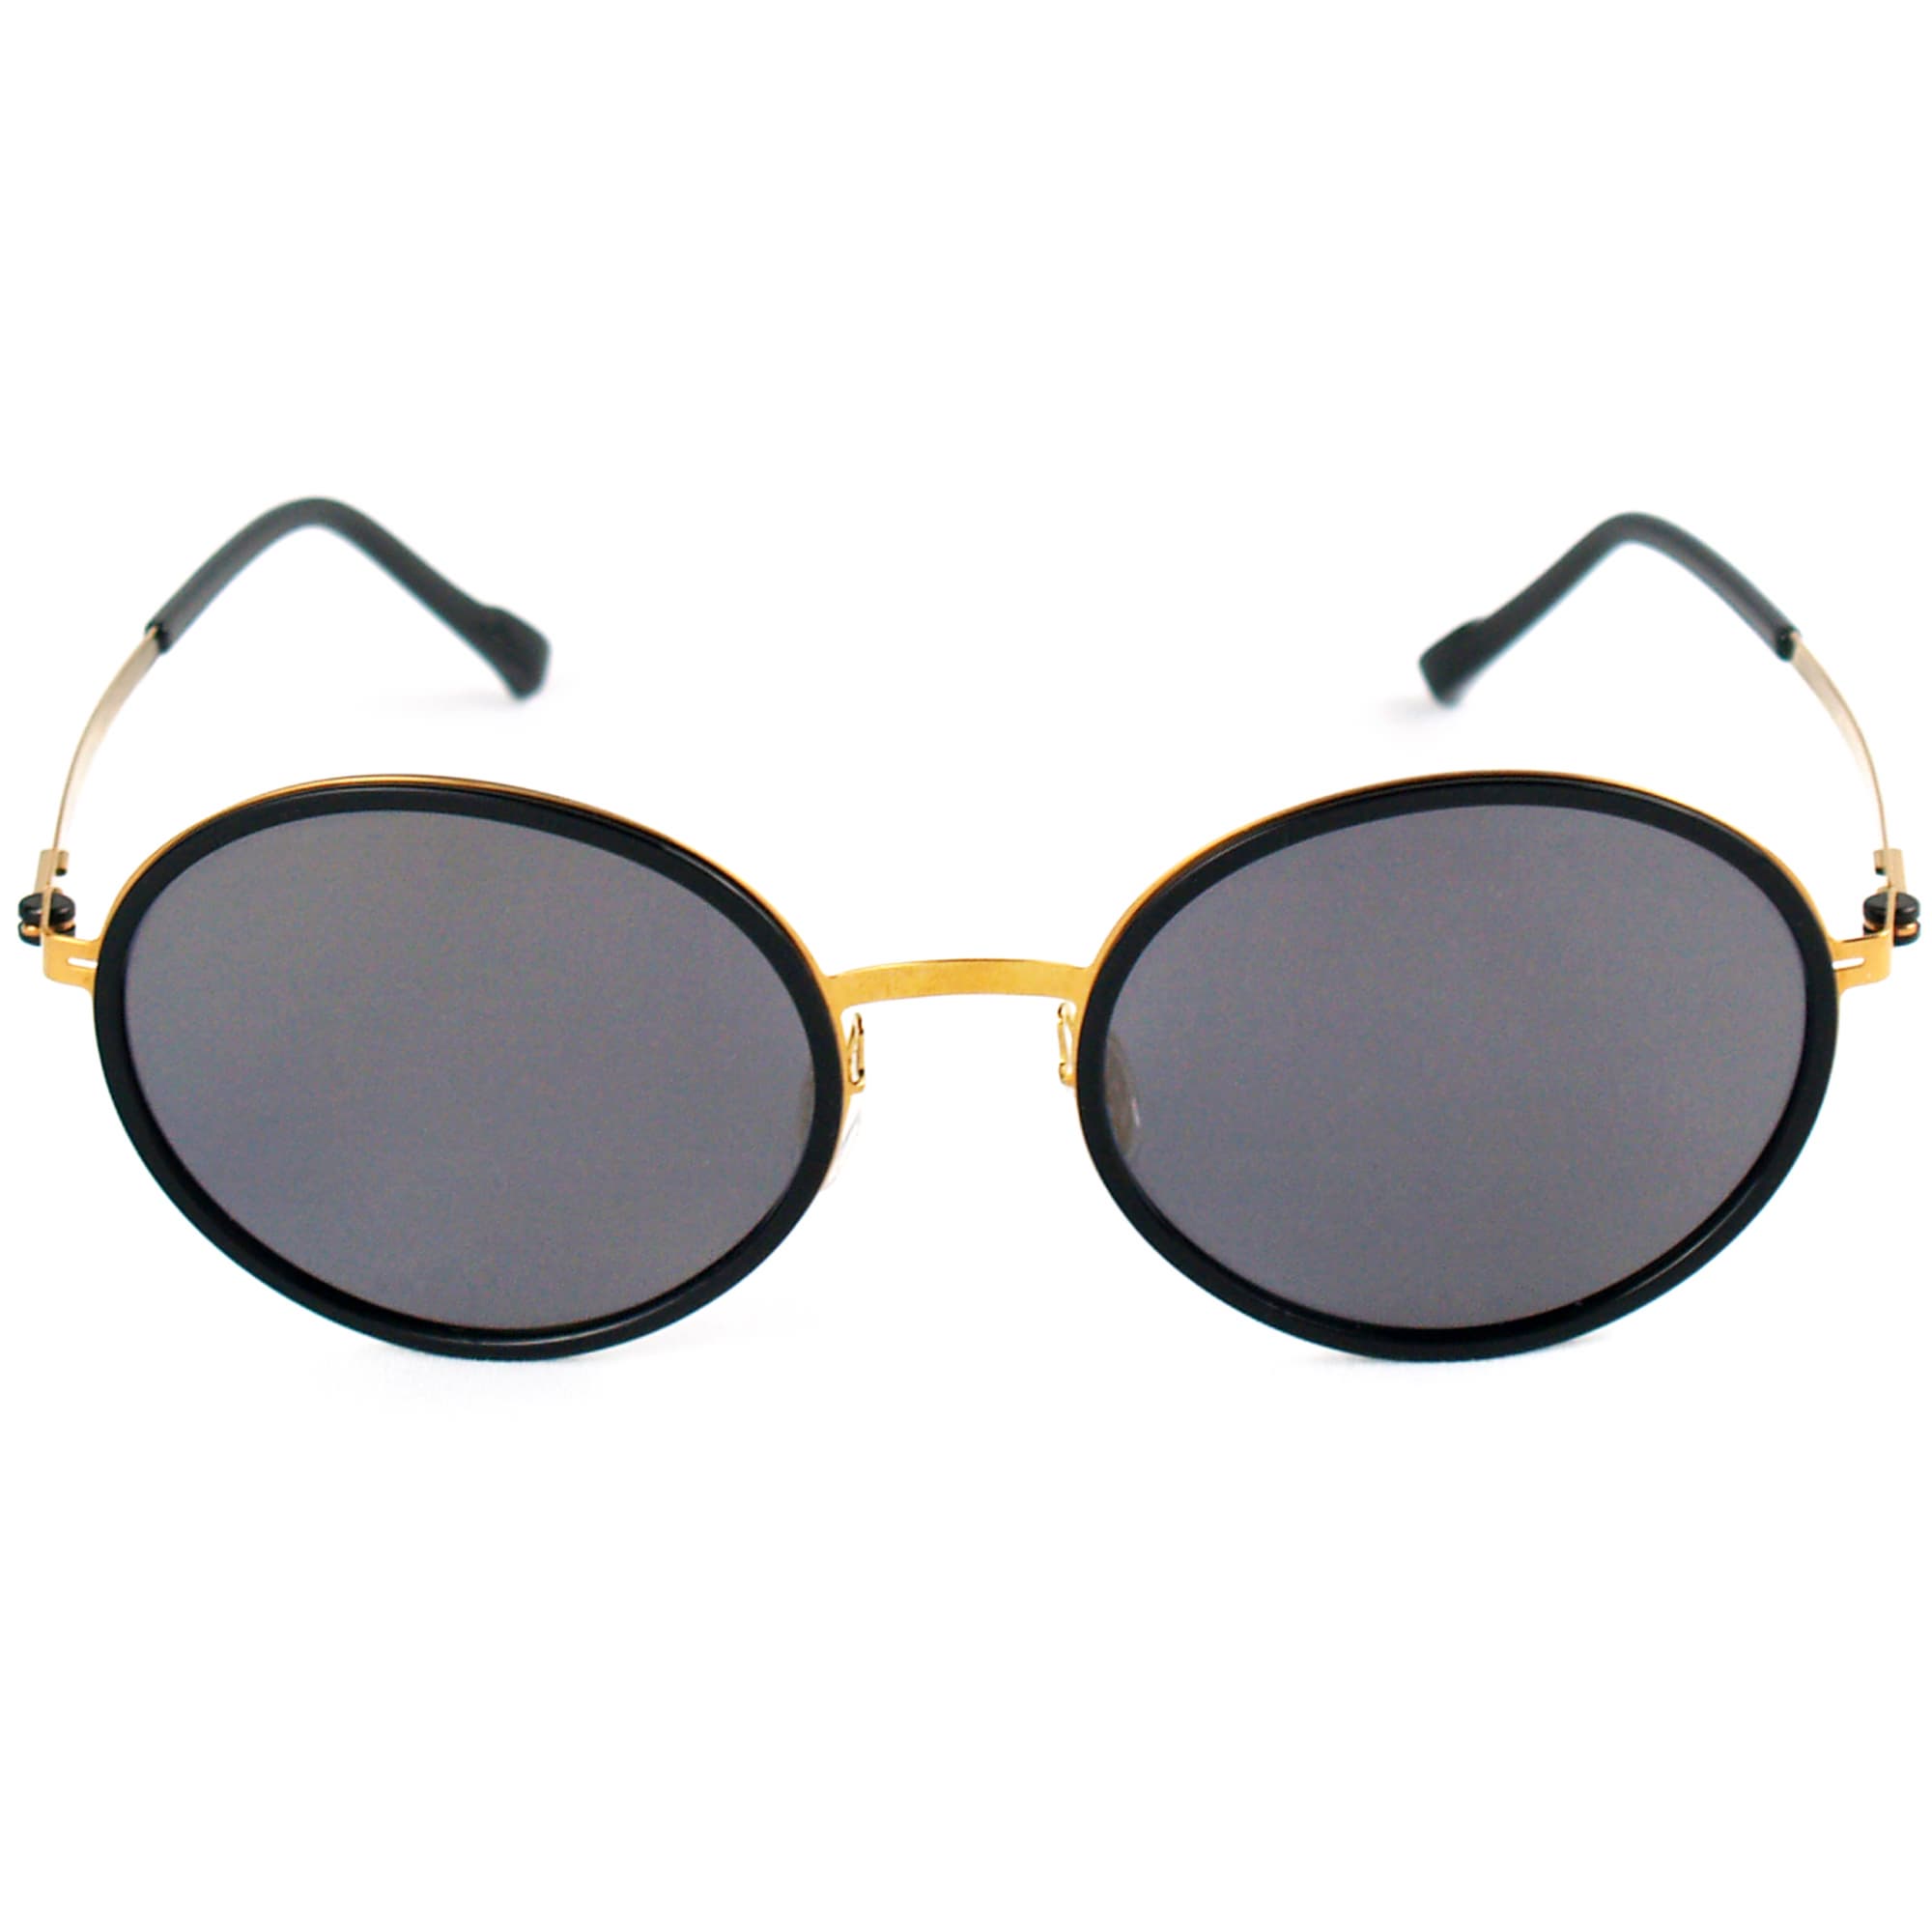 MetaphorI  Acetate _ Thin Stainless Steel  Frame Sunglasses